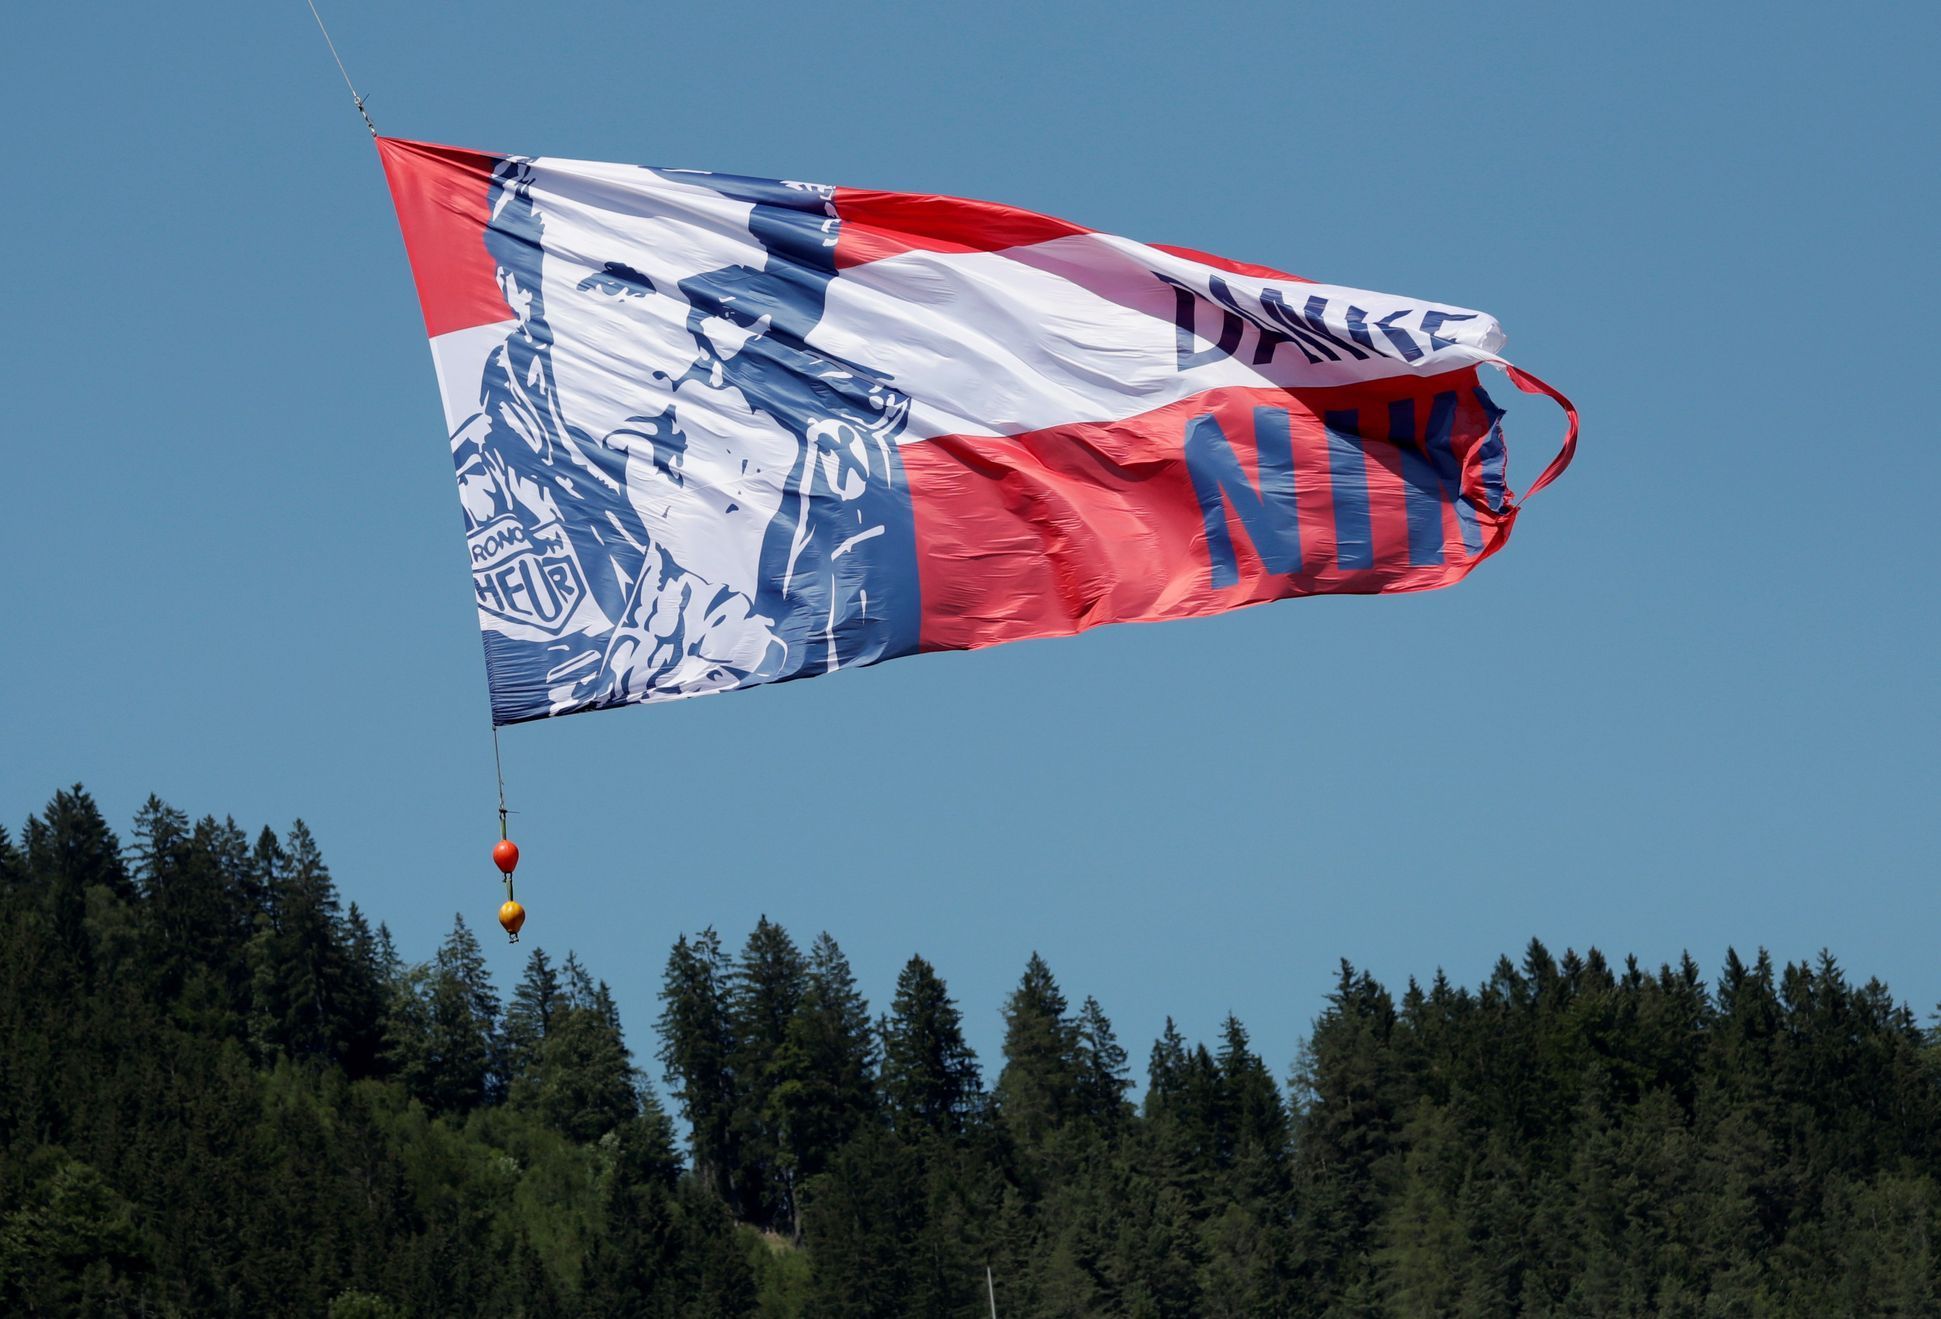 Vlajka s portrétem Nikiho Laudy nad Red Bull RIngem před startem VC Rakouska formule 1 2019